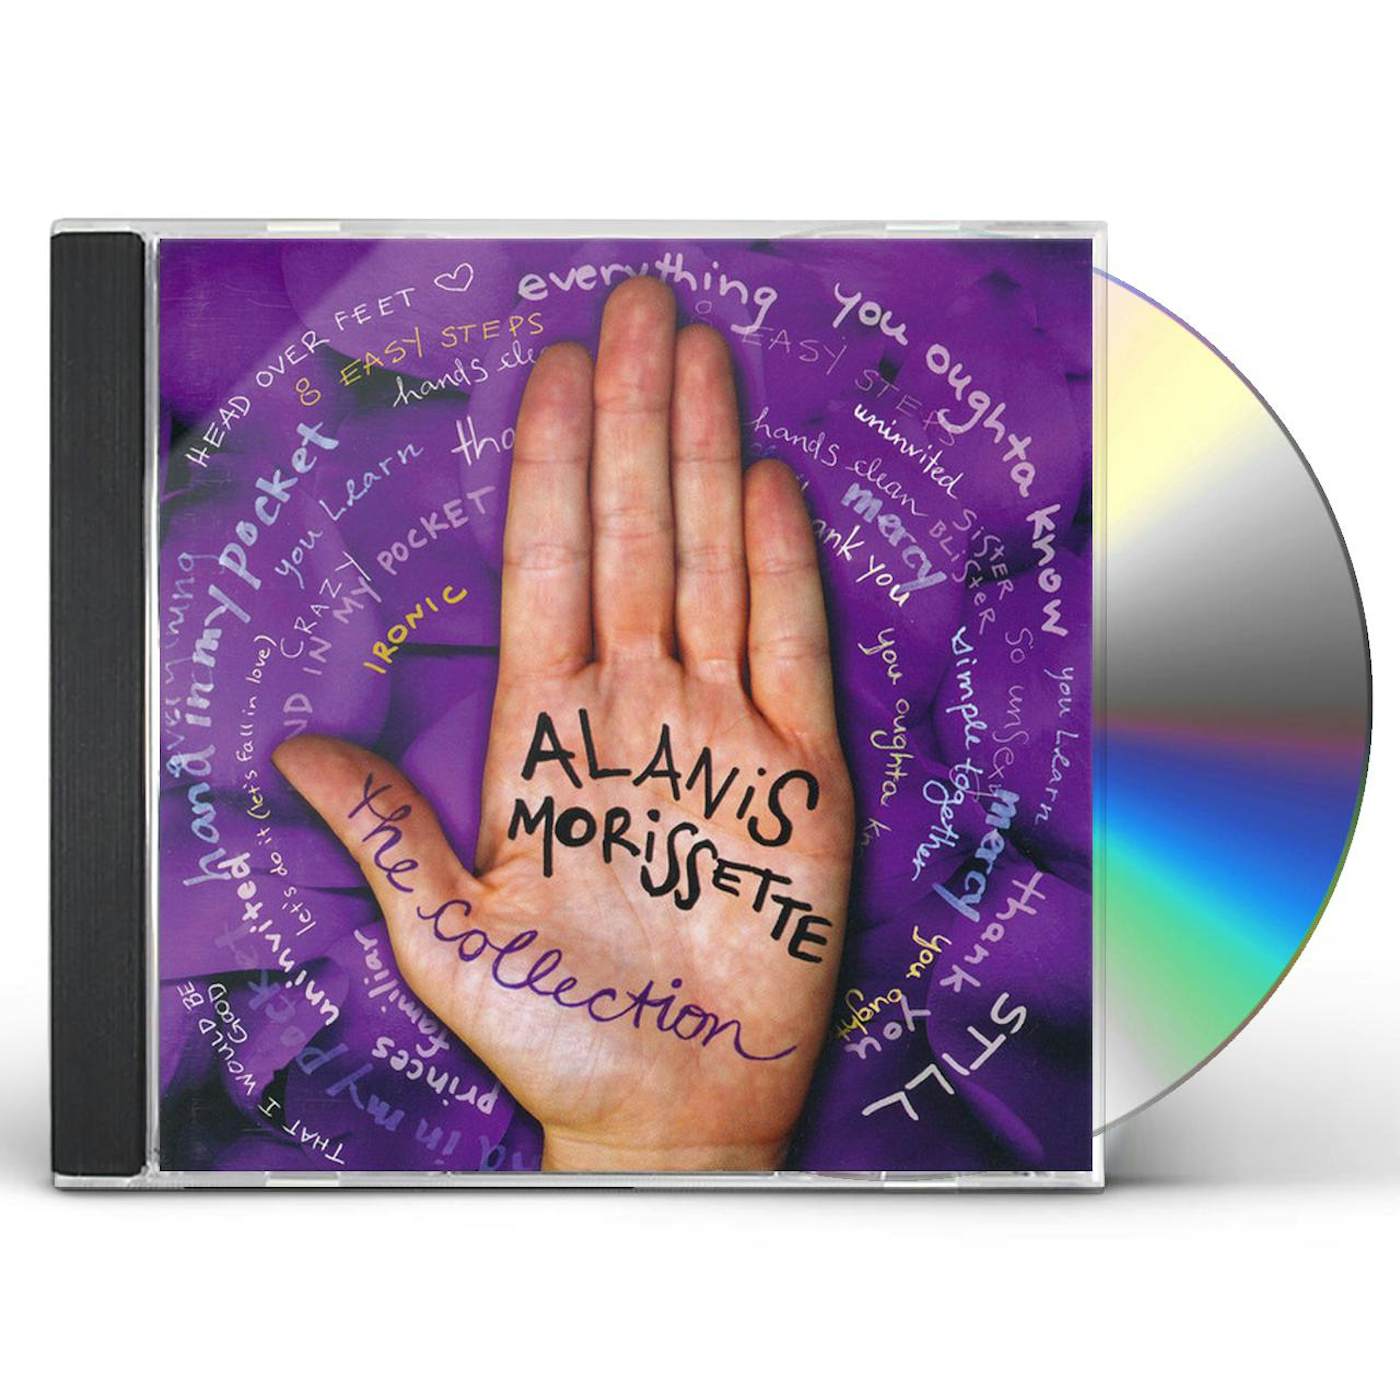 Alanis Morissette COLLECTION CD